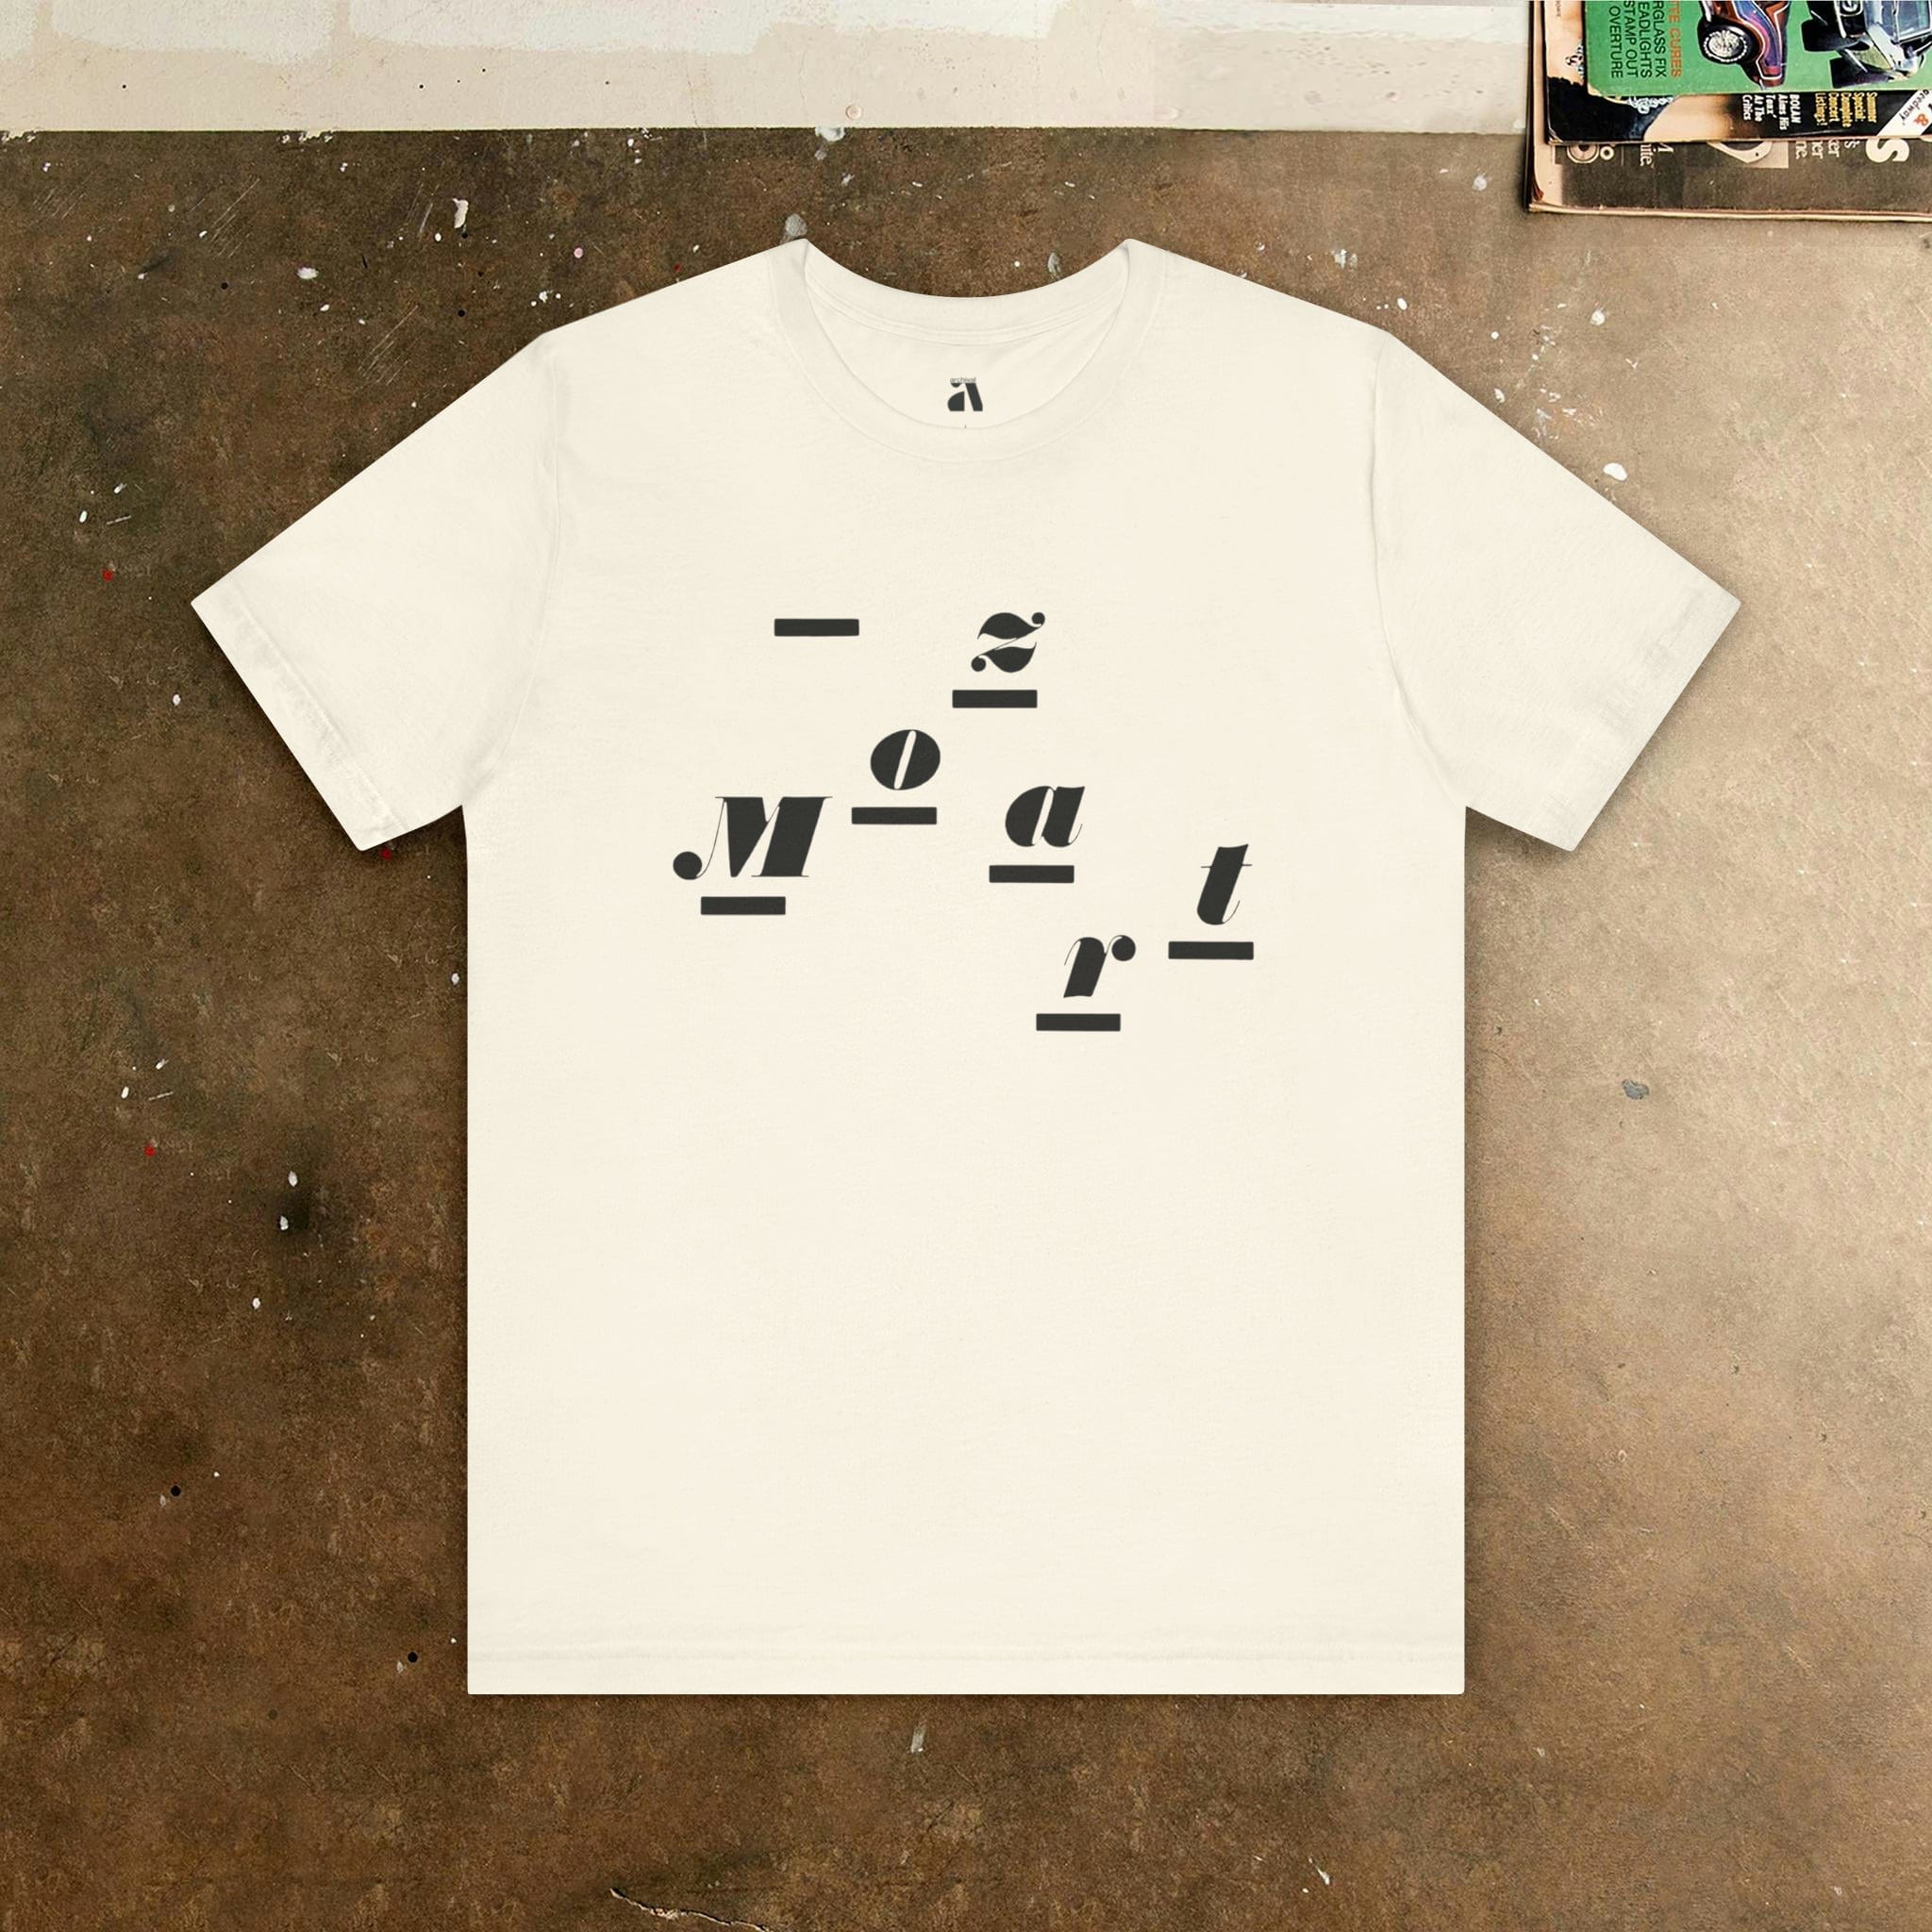 Mozart: Wordmark T-Shirt